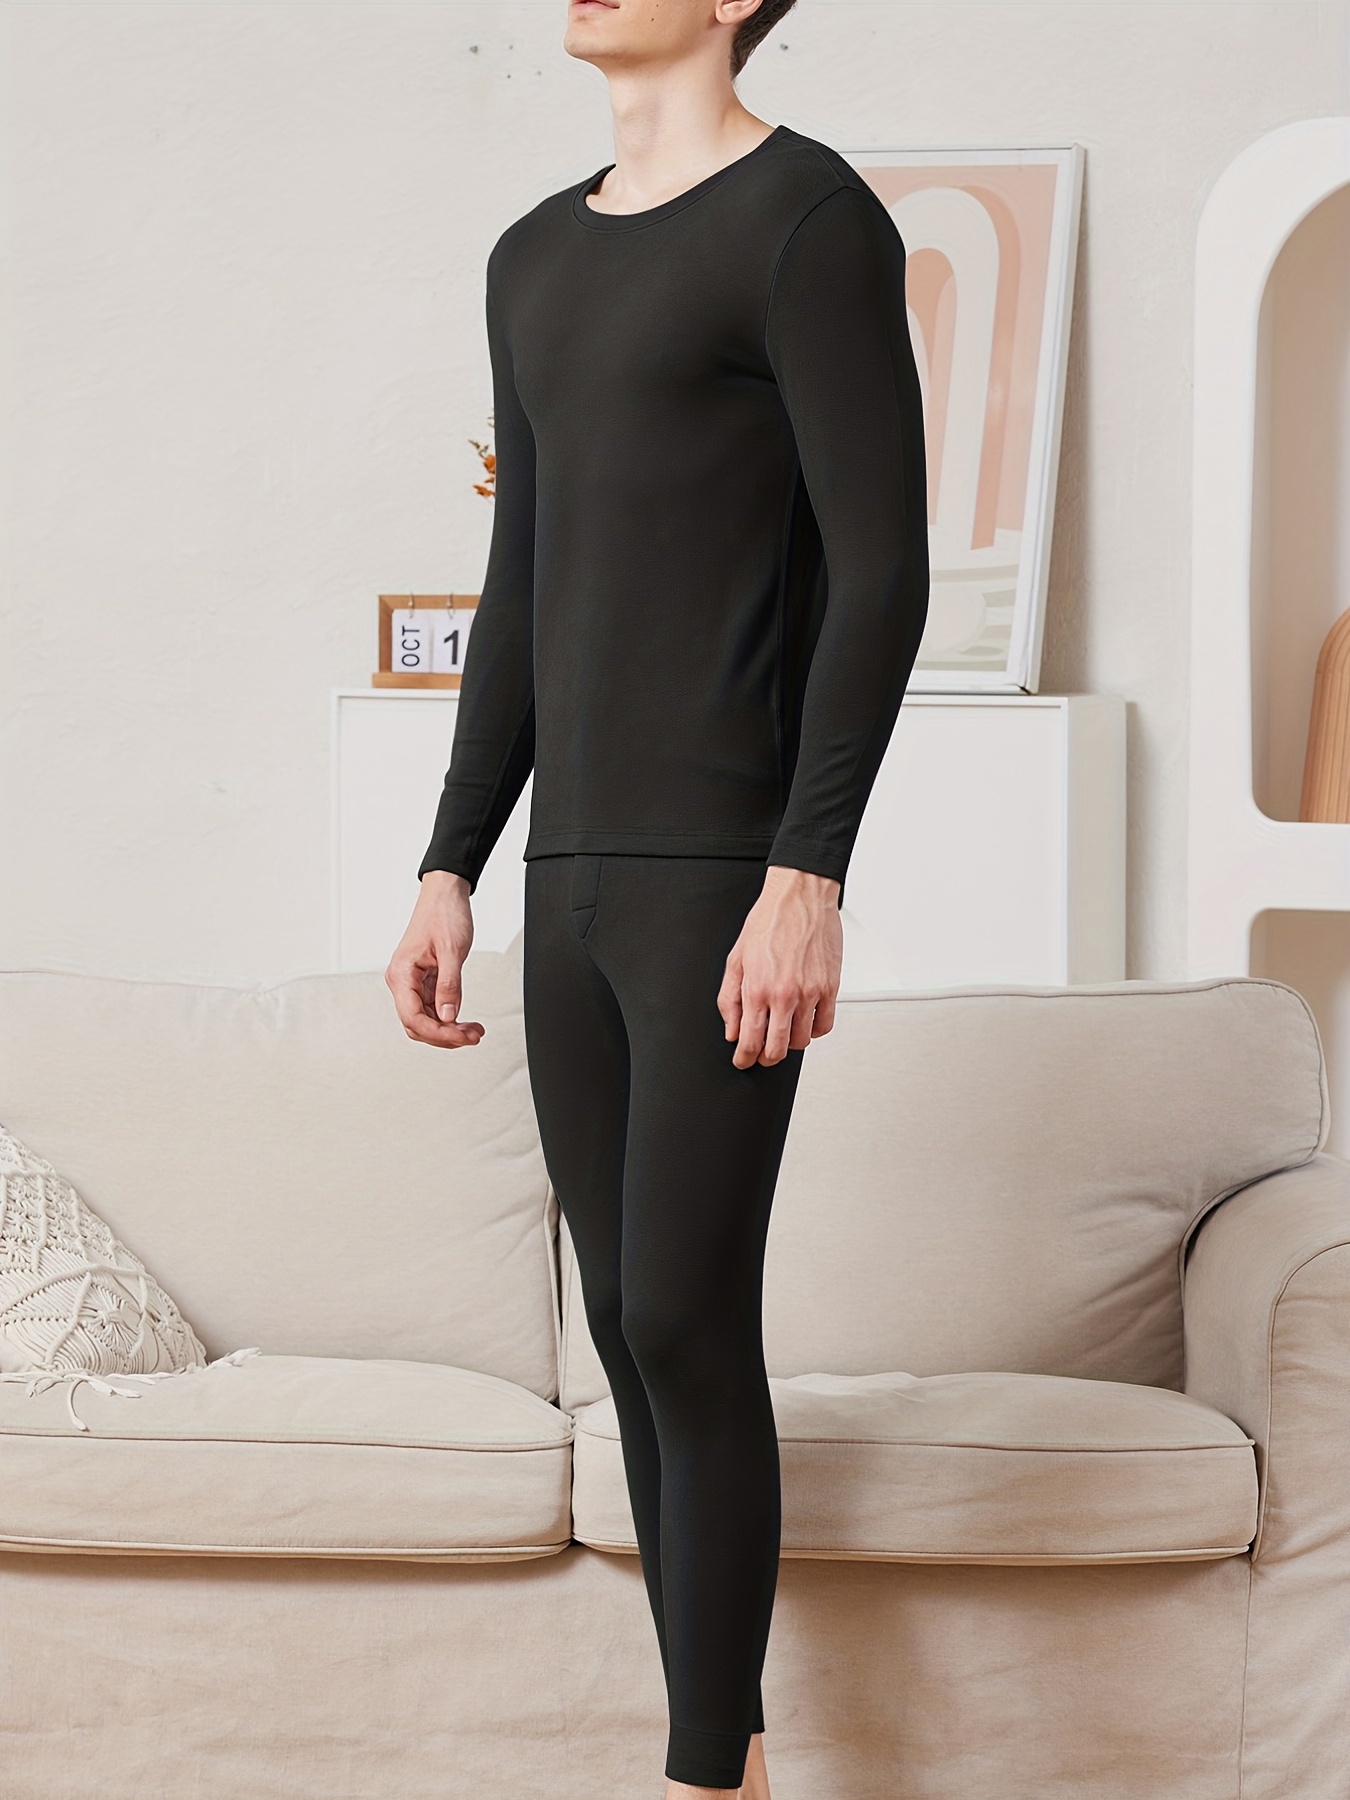 Thermal Underwear For Men, Ultra Soft Fleece Winter Warm Base Layer Top &  Bottom Set, Autumn Clothes Set